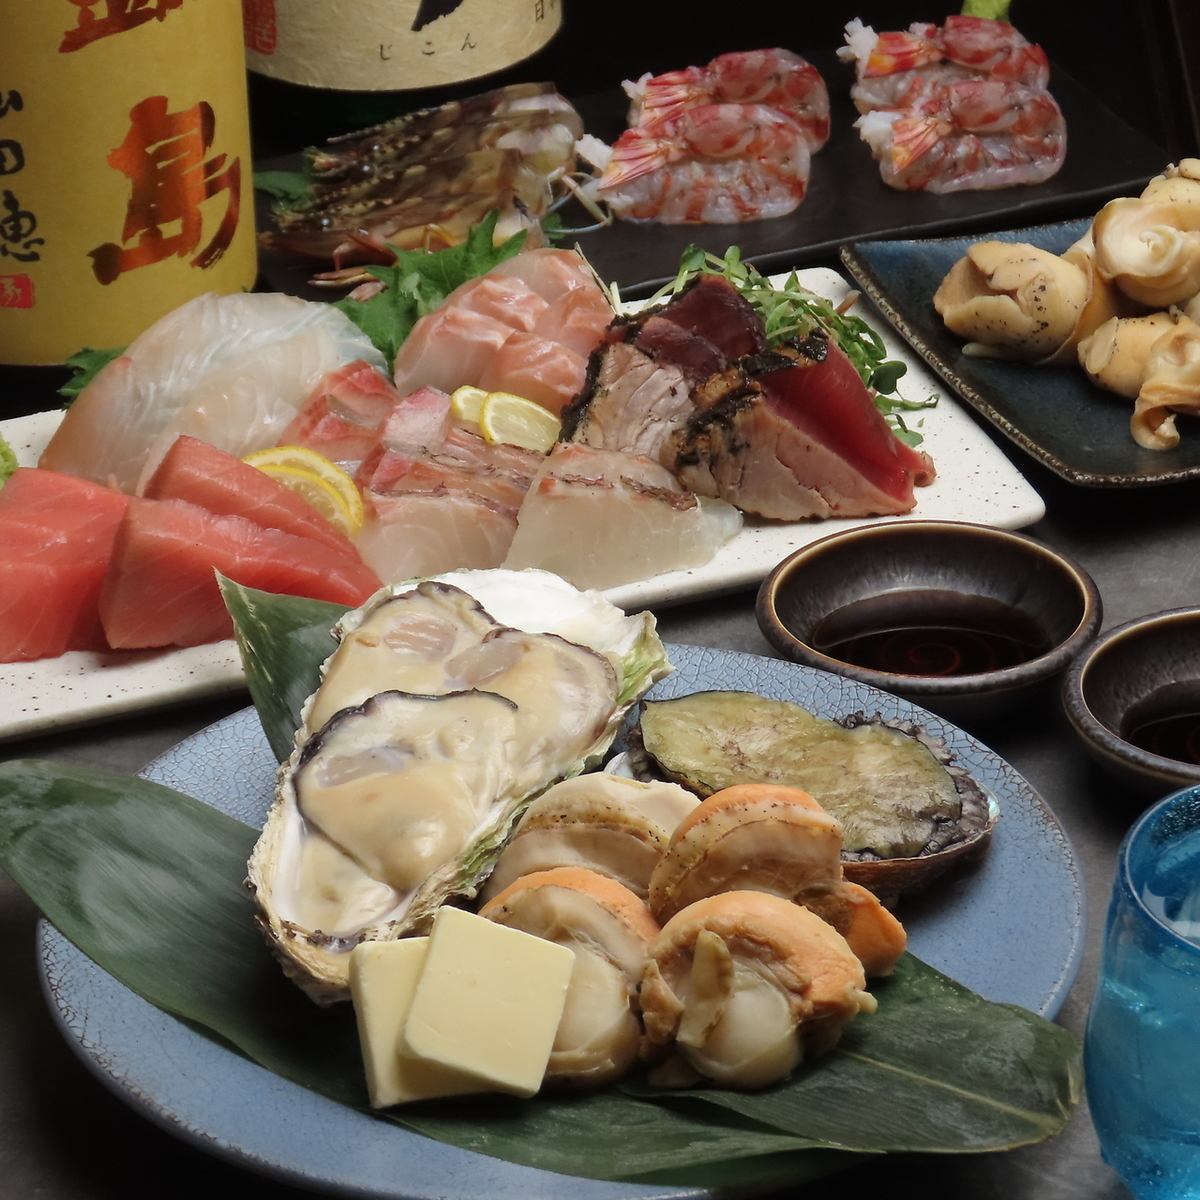 Please enjoy the fresh fish purchased from Toyosu!